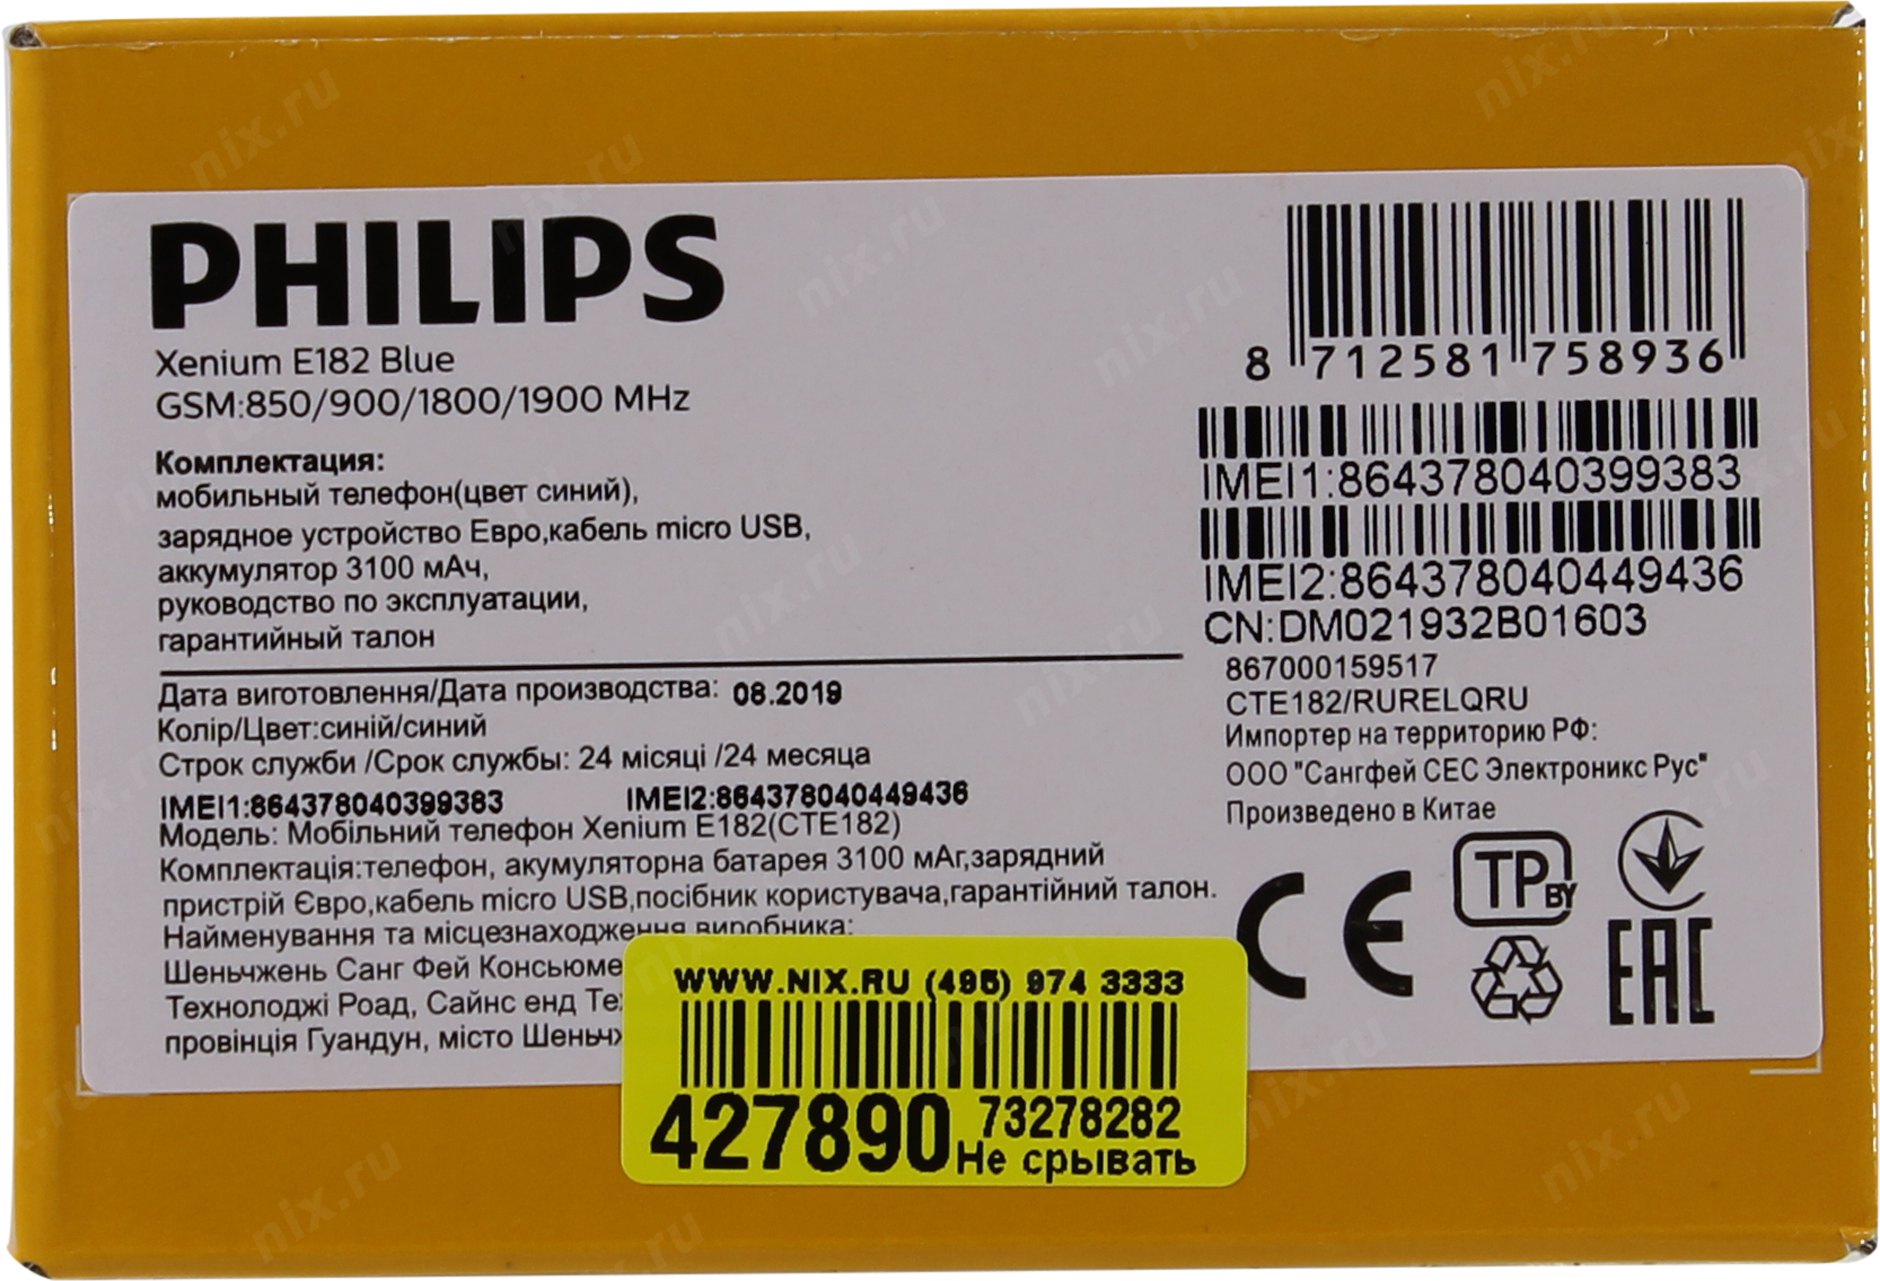 Philips xenium e182. Телефон Philips Xenium e182. Philips Xenium е182. Philips Xenium e182 Philips.